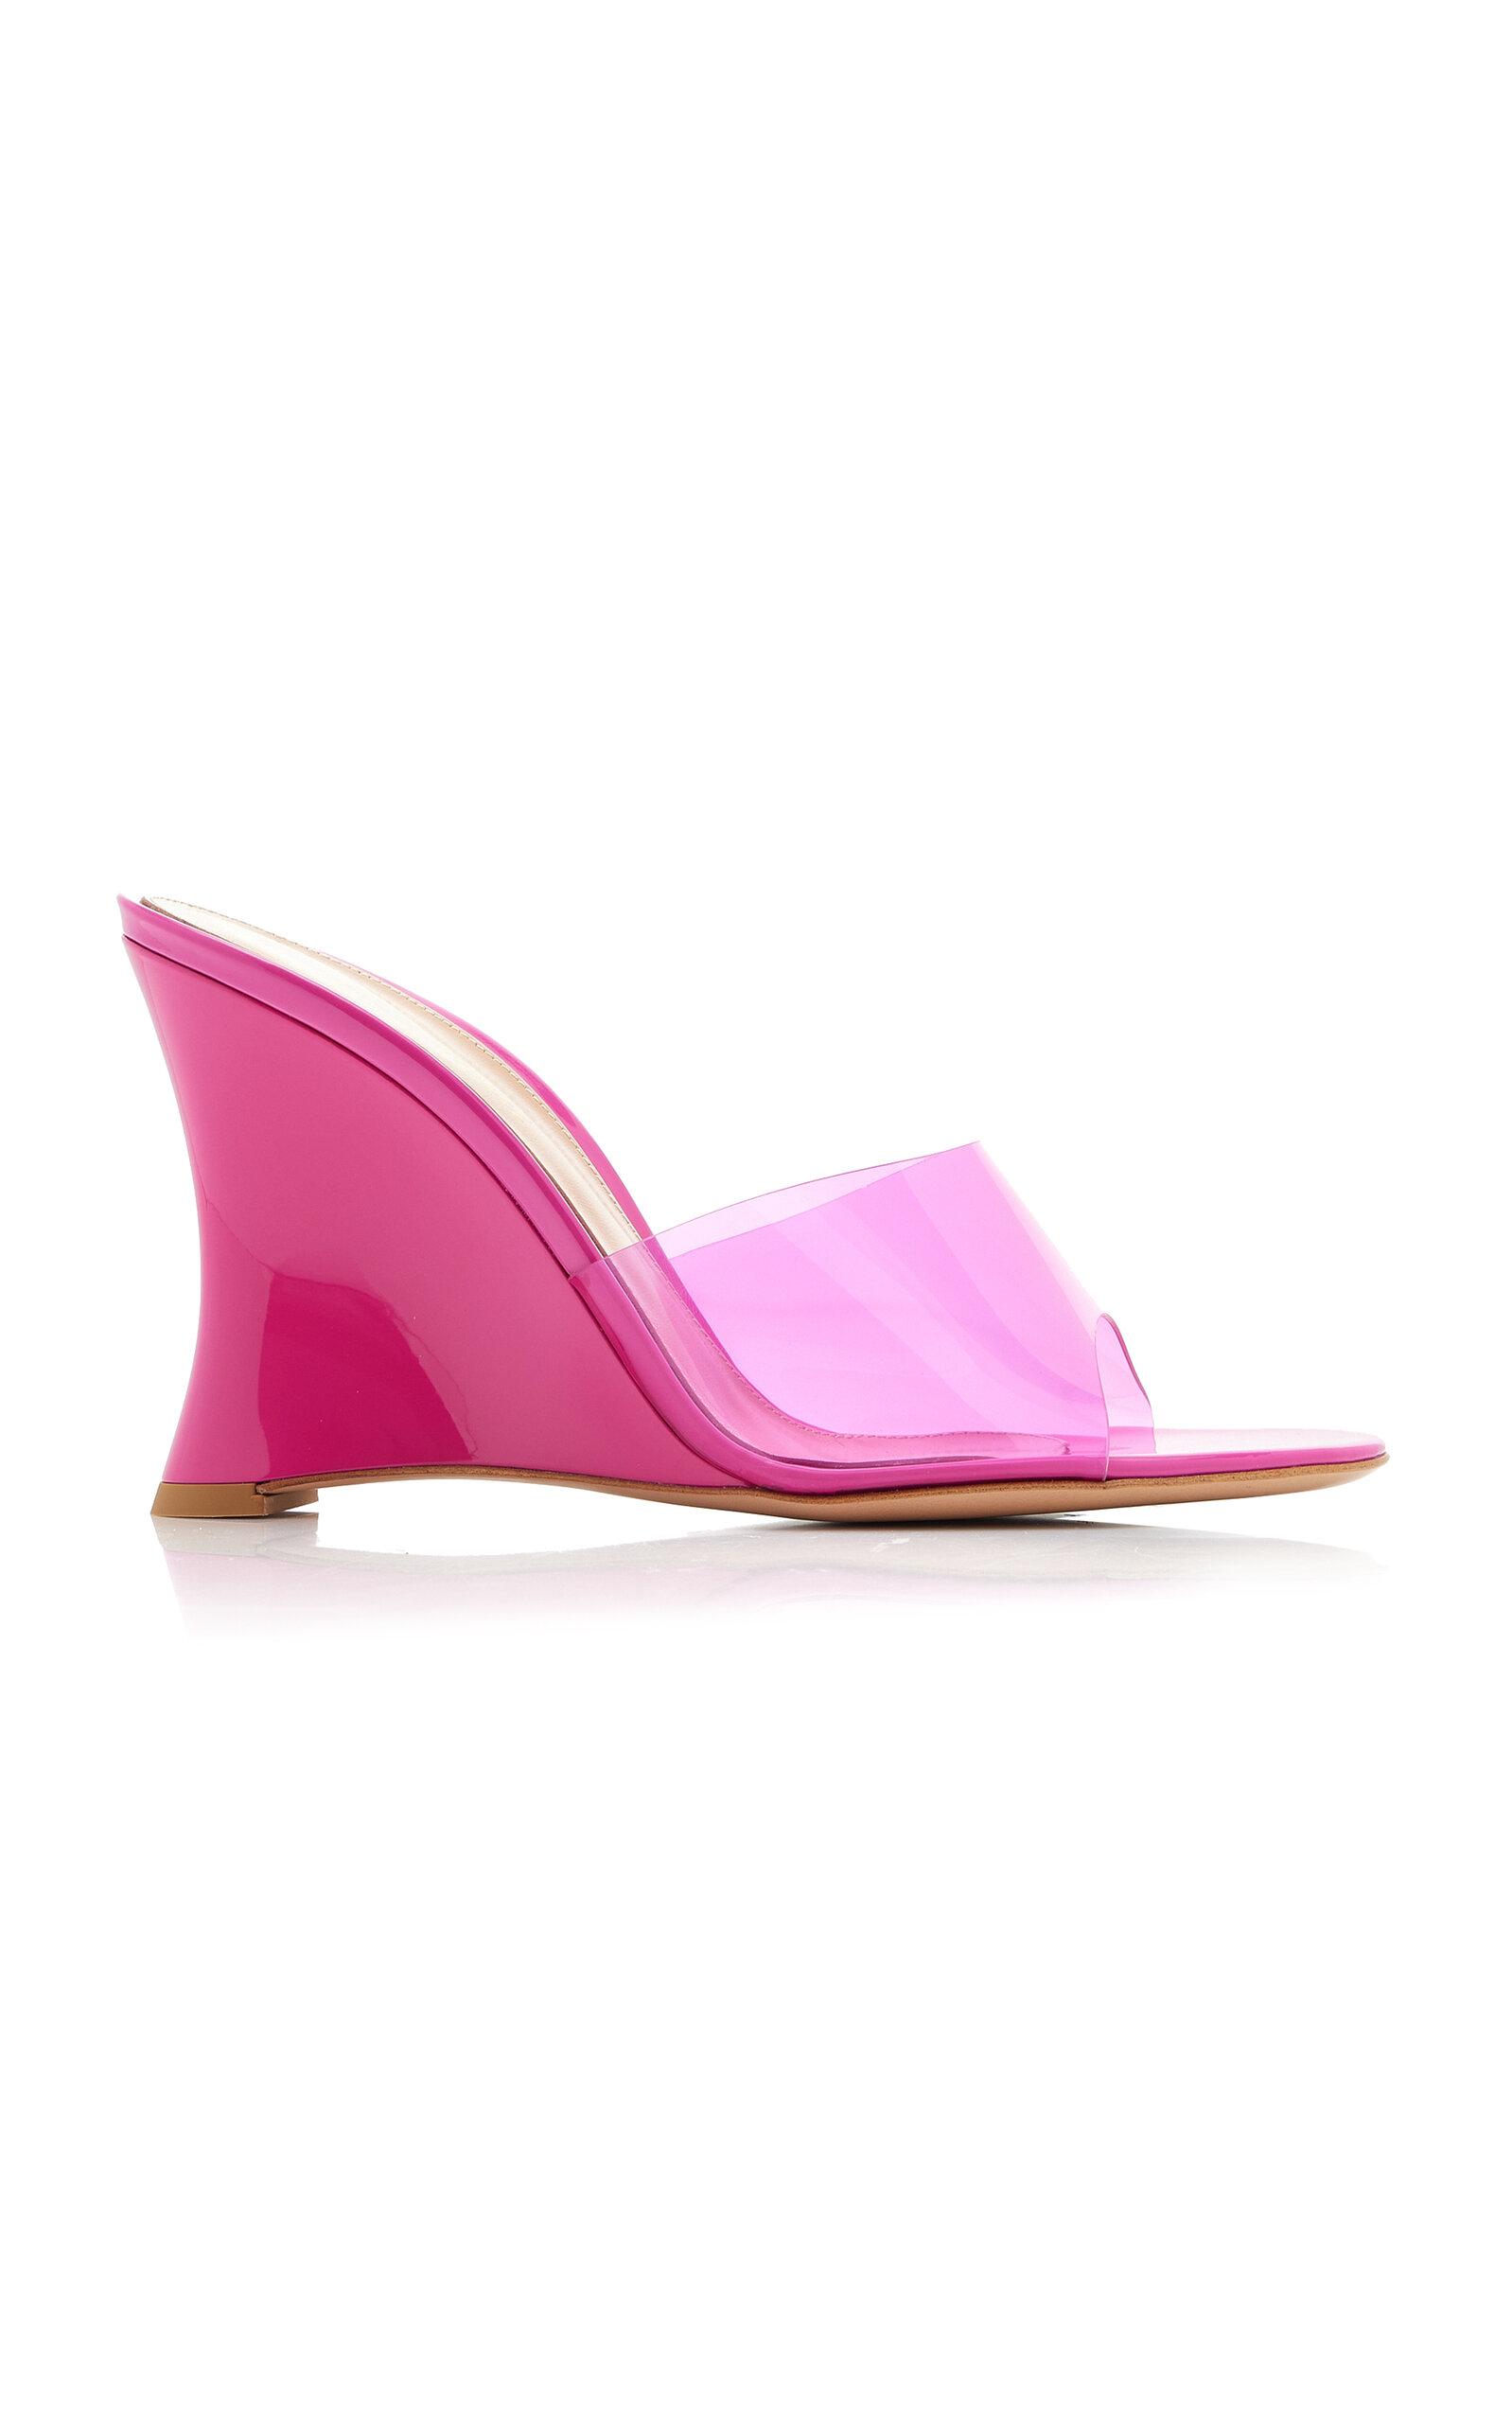 Gianvito Rossi Futura Pvc Sandals in Pink | Lyst